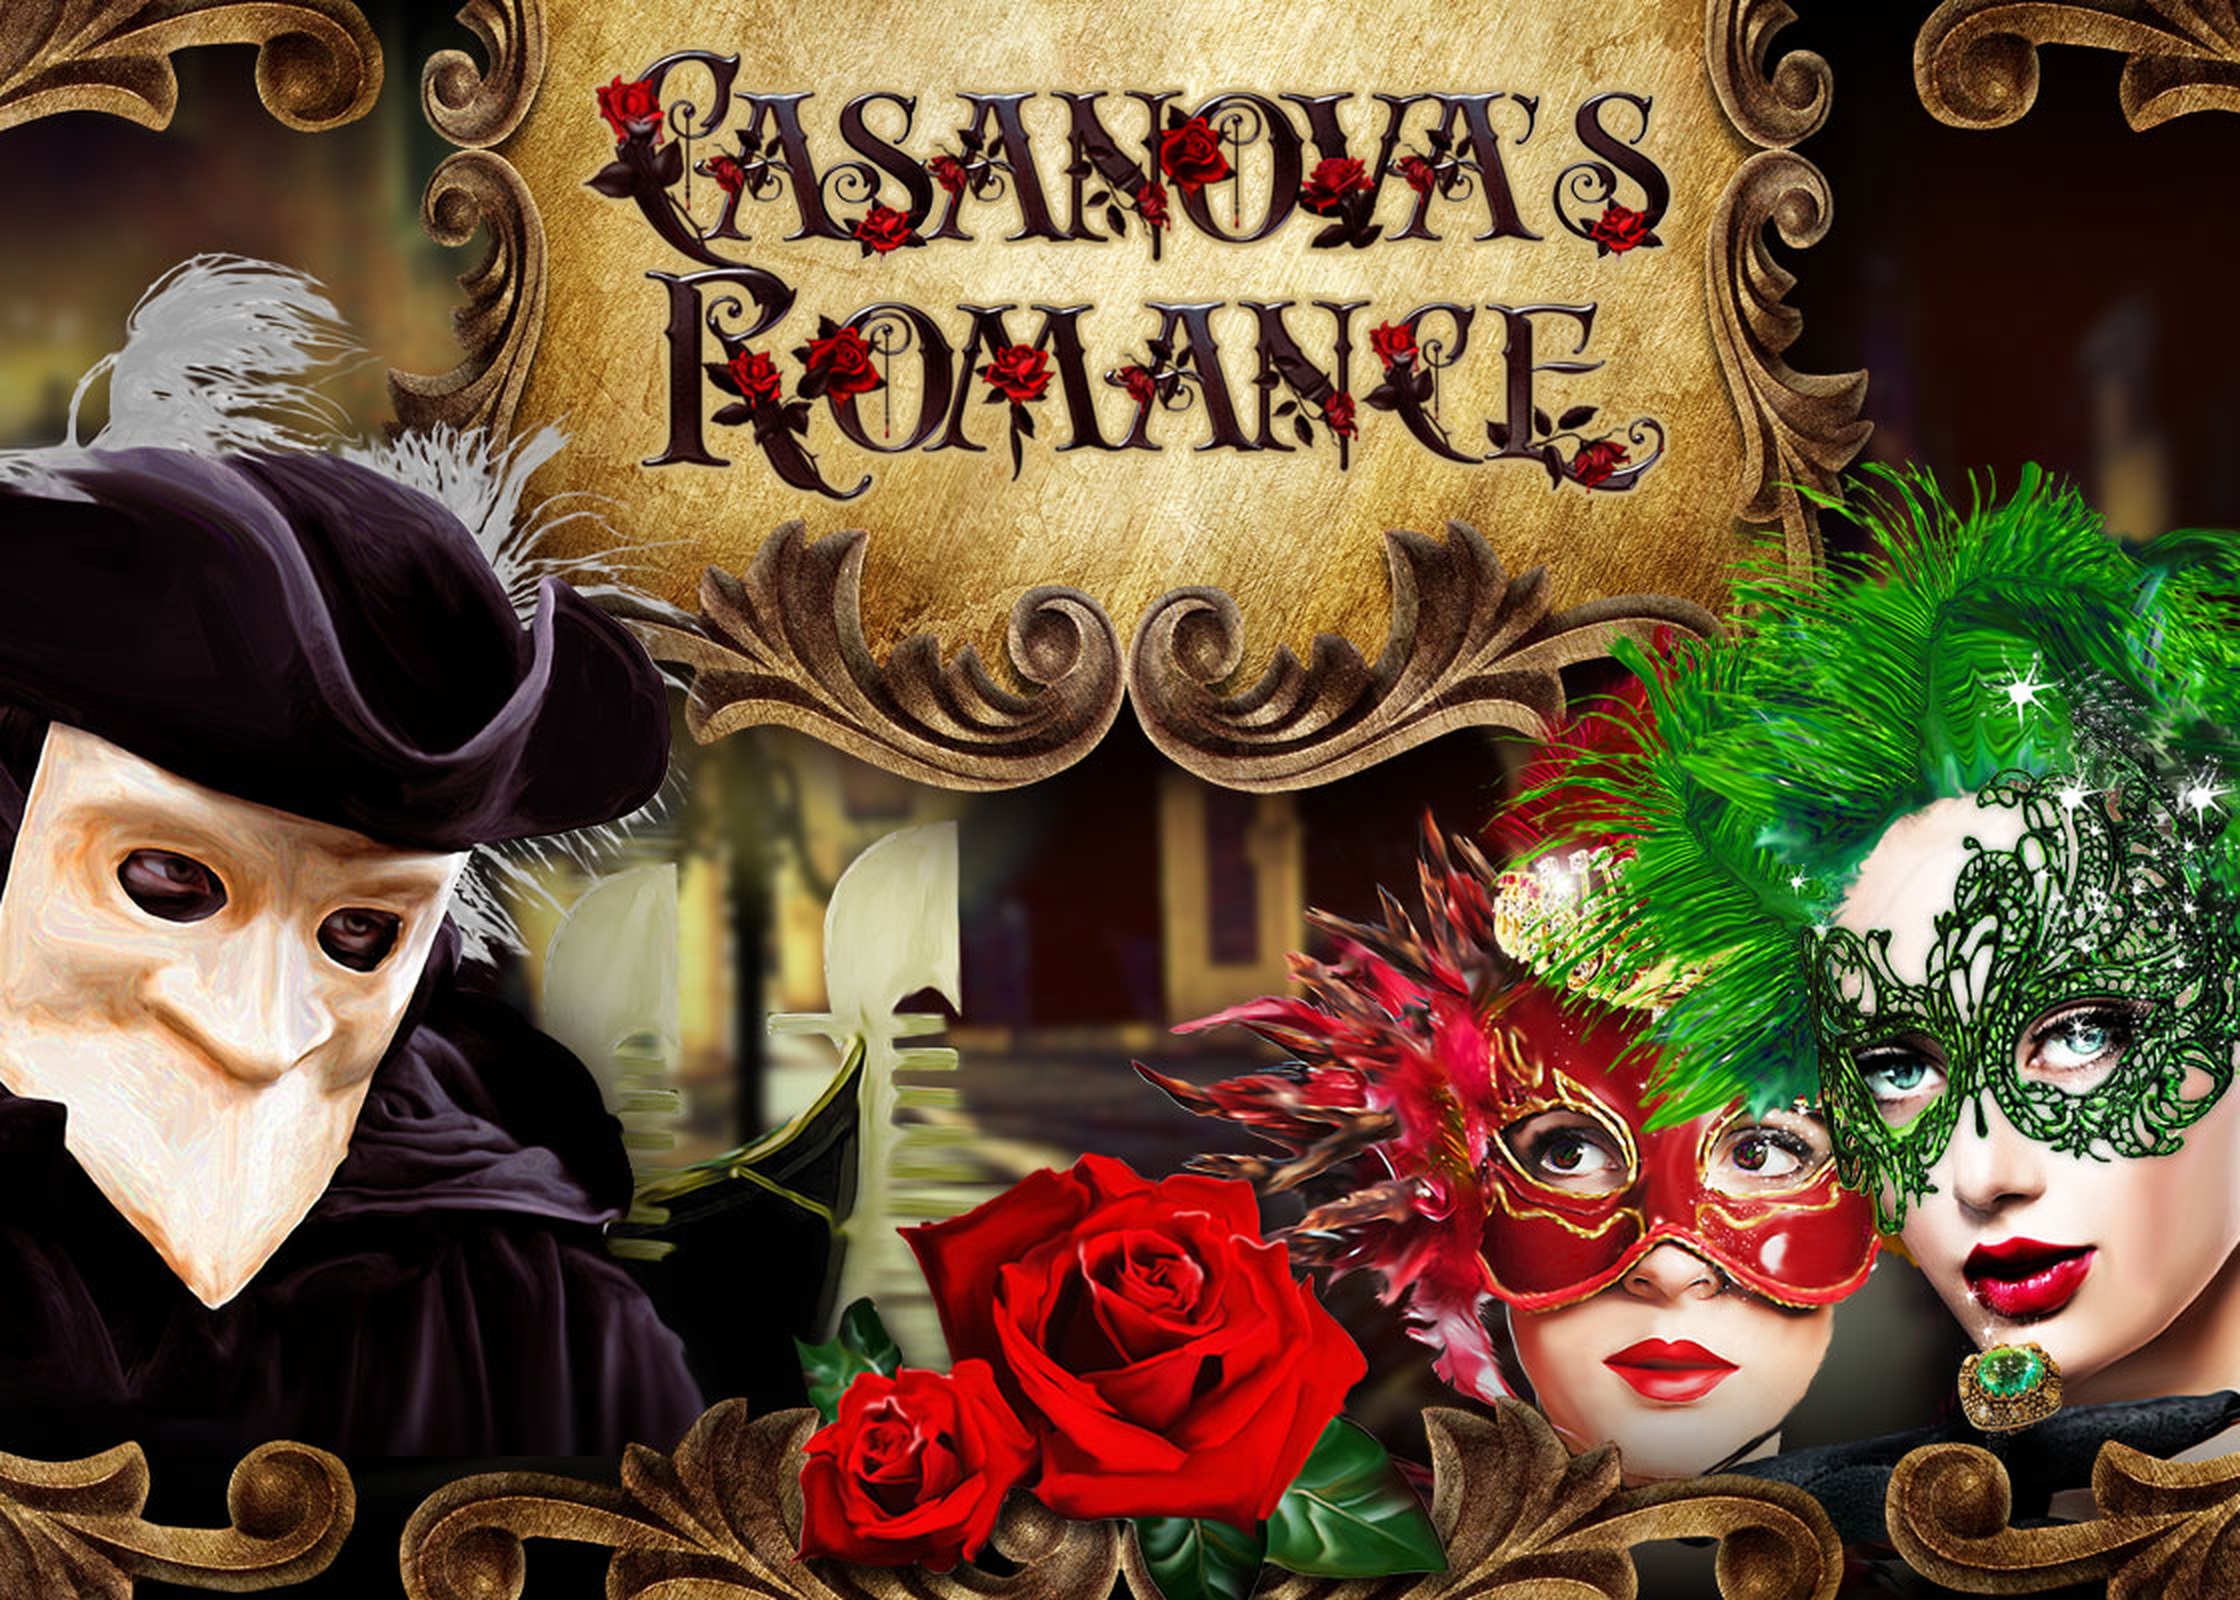 Casanova's Romance HD demo